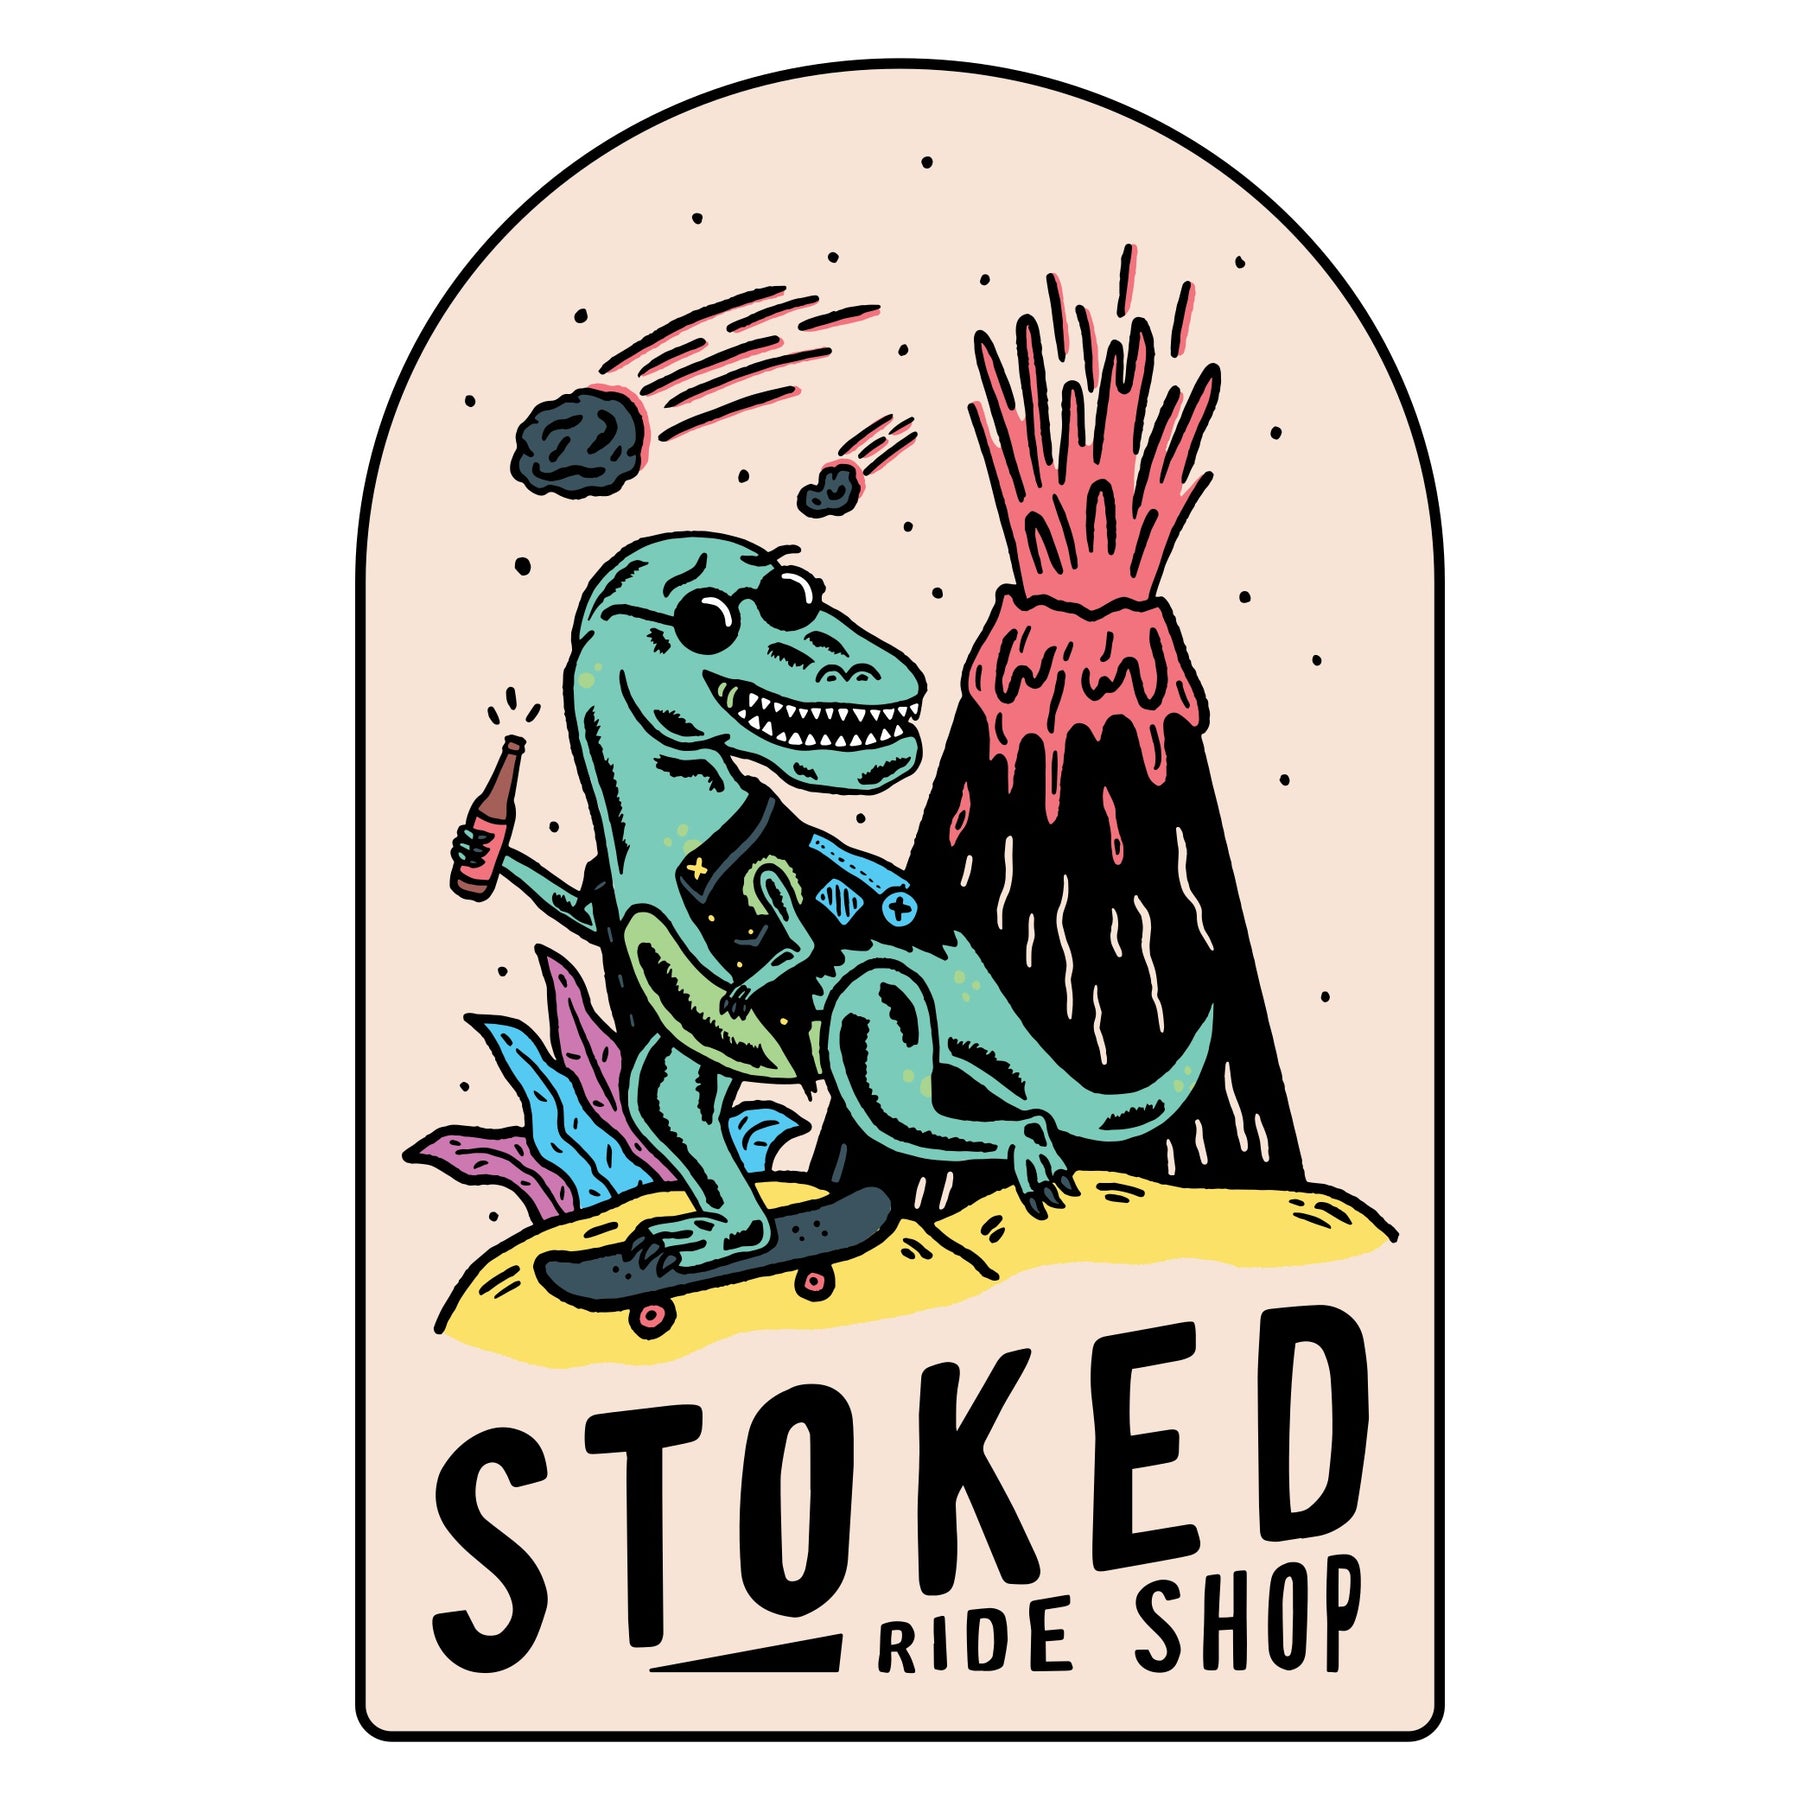 Stoked Ride Shop Sticker, Shredosaurus